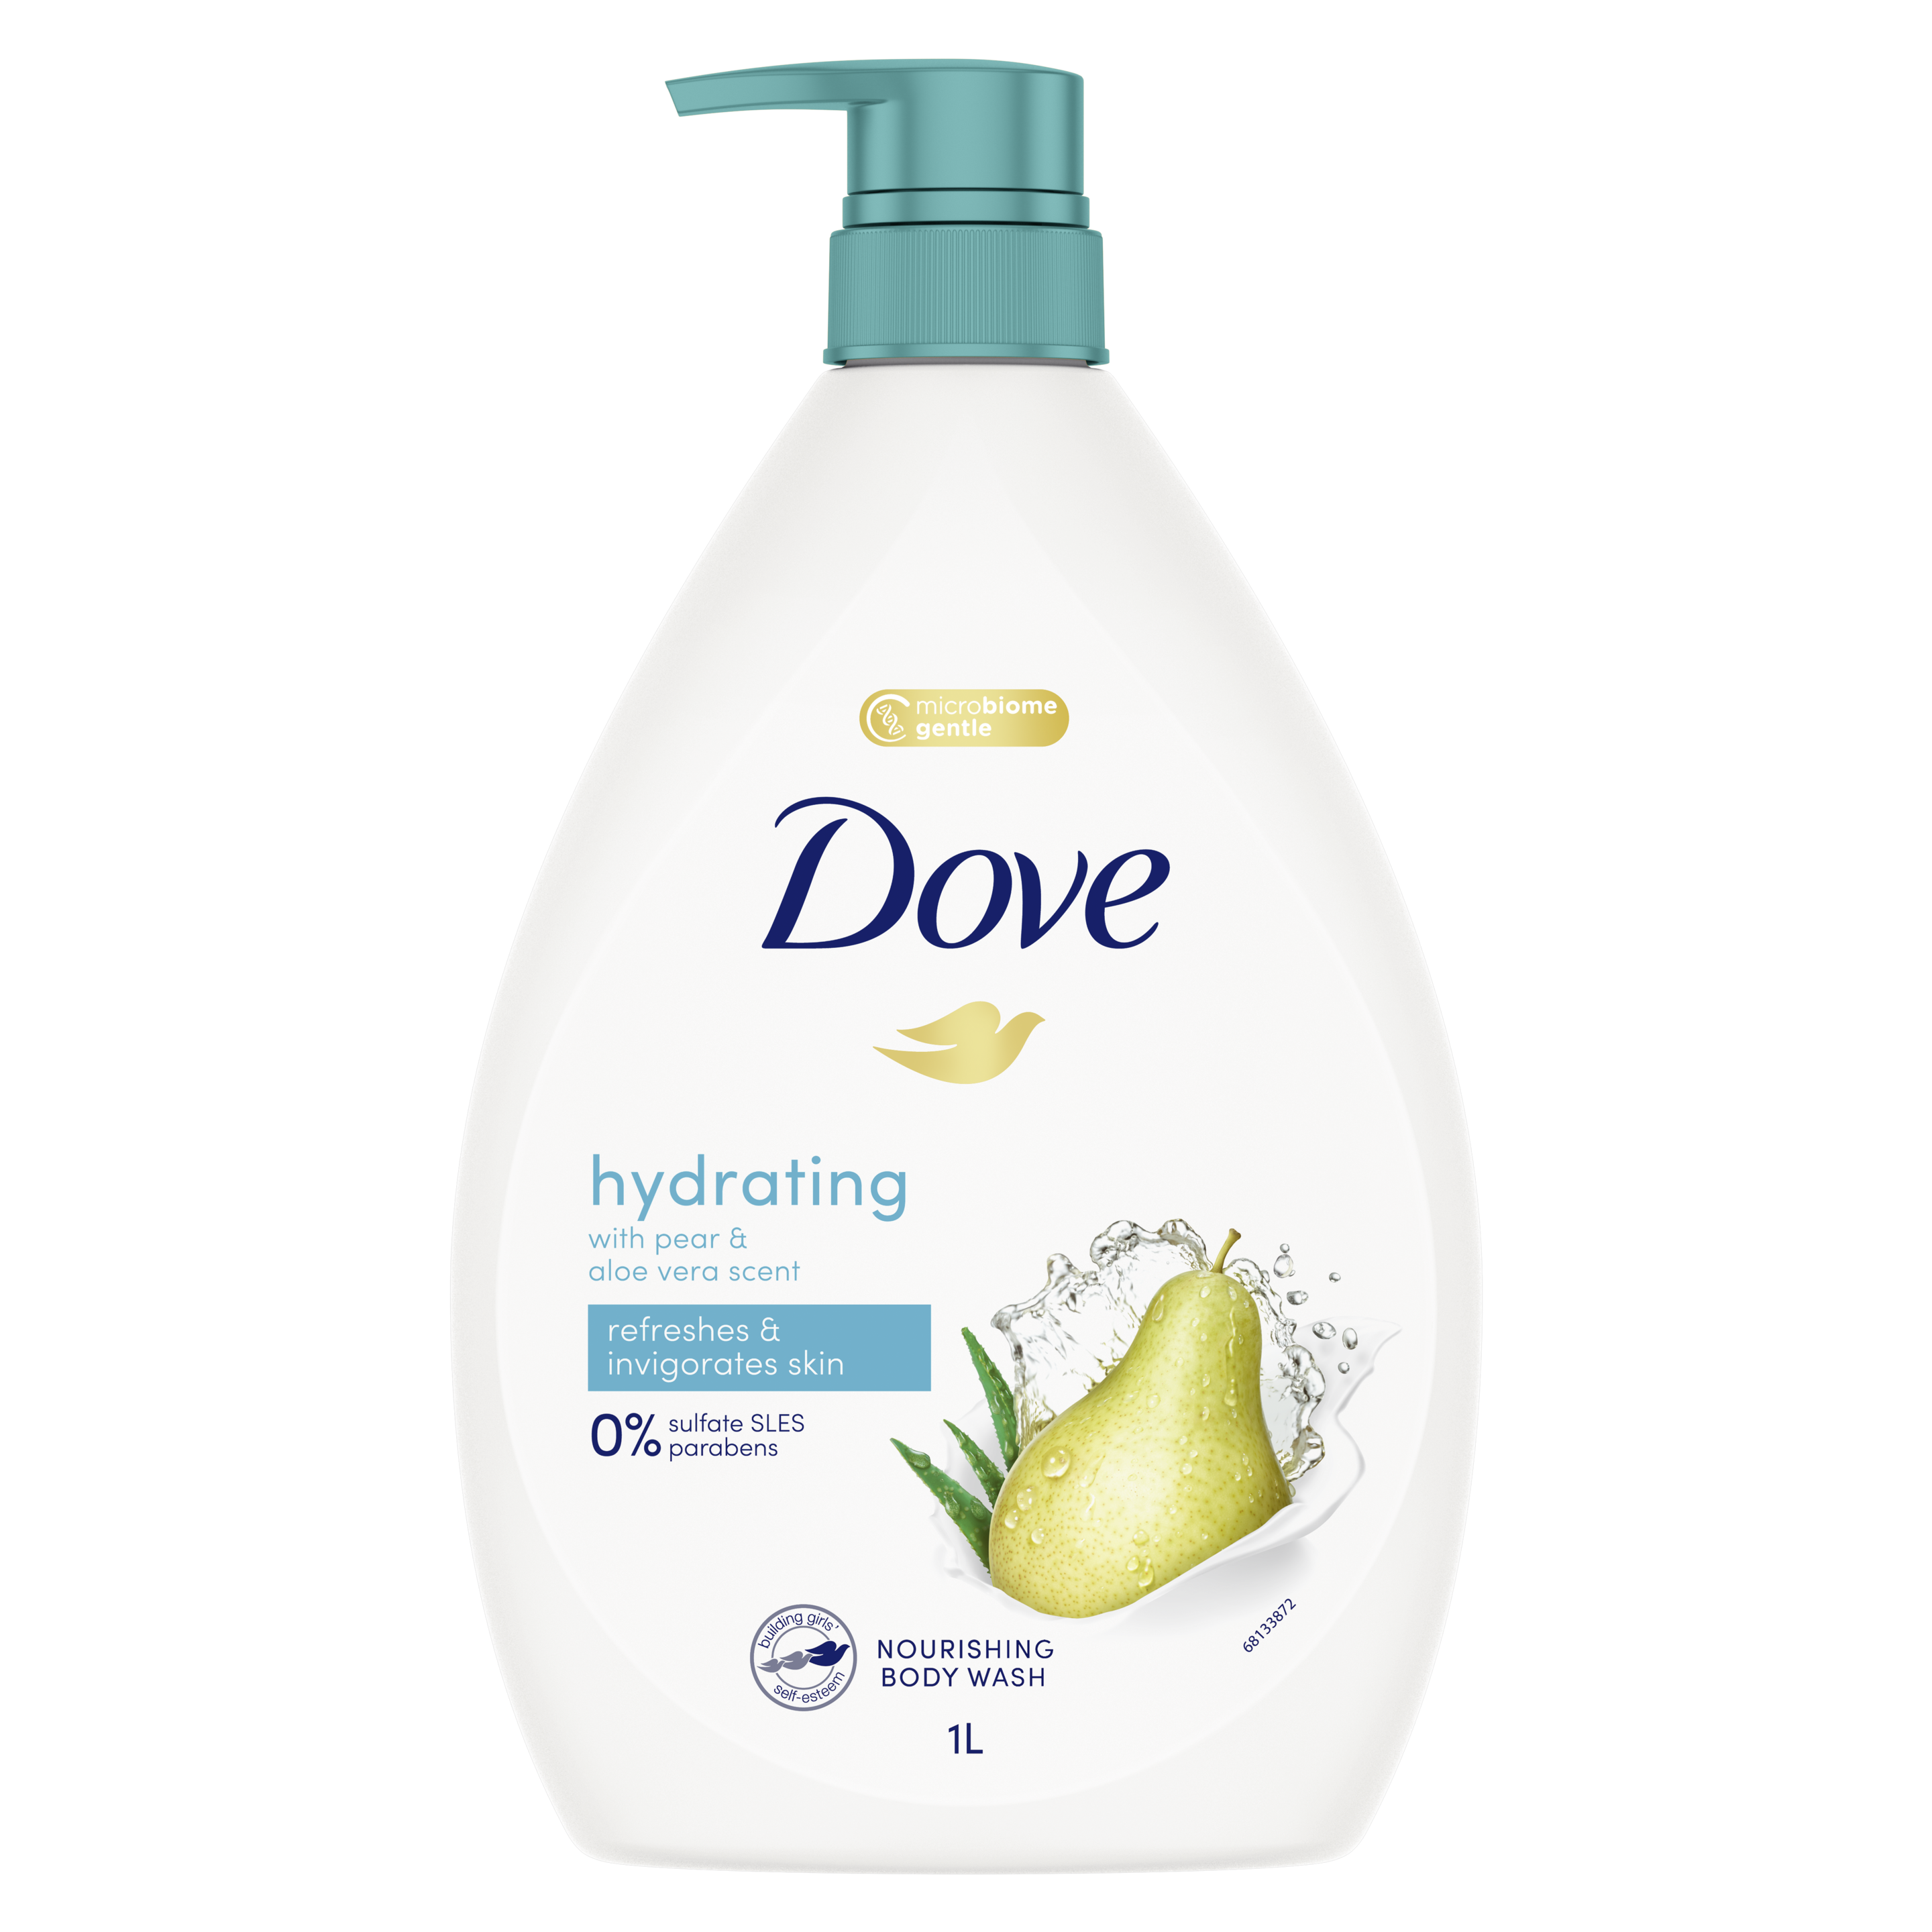 Dove Hydrating Pear & Aloe Body Wash 1L Text